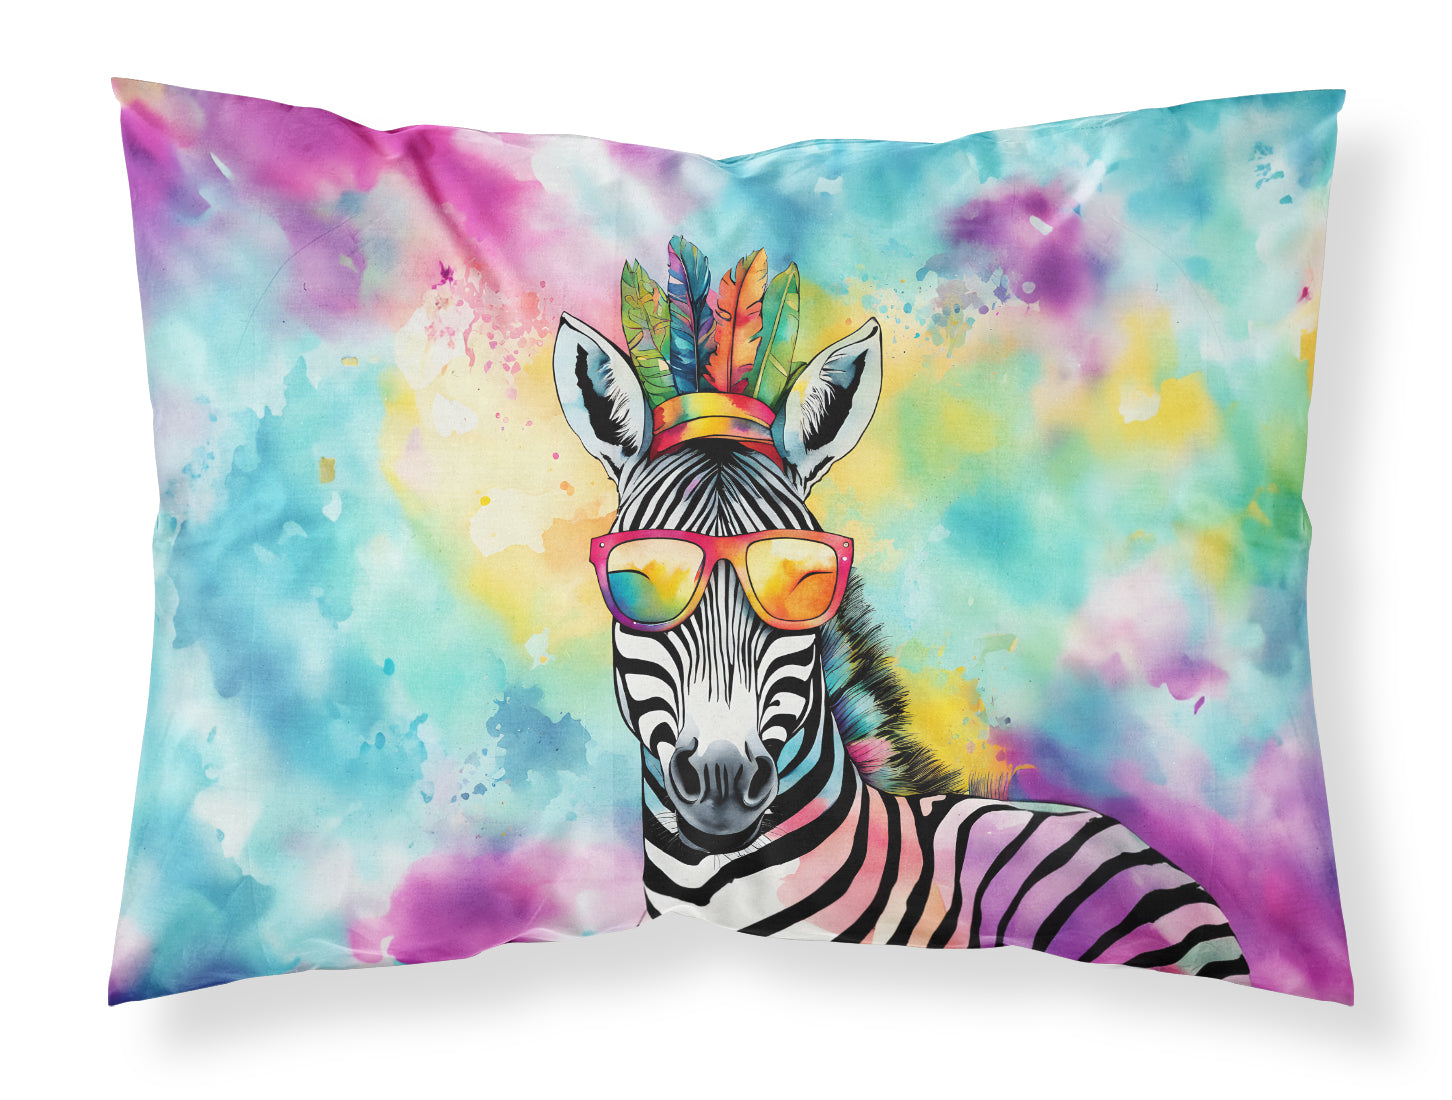 Buy this Hippie Animal Zebra Standard Pillowcase